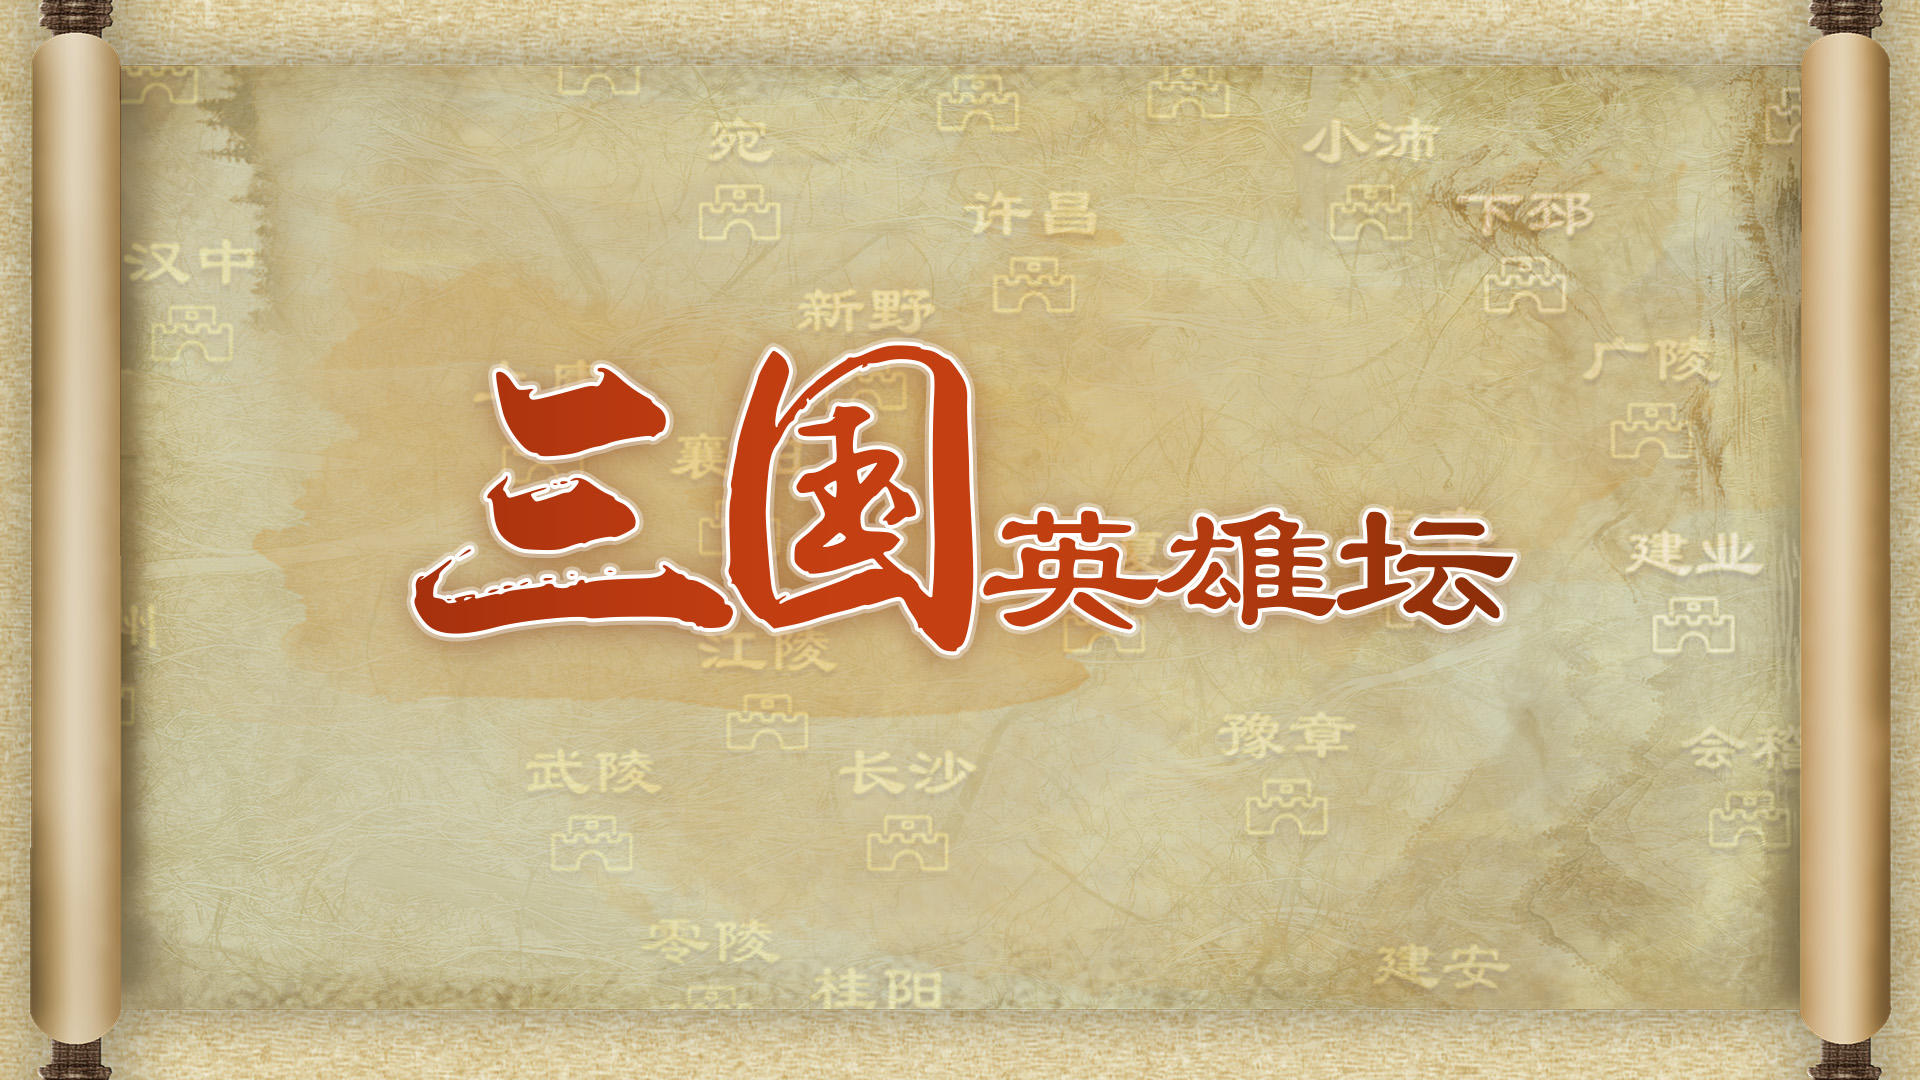 Banner of 三國英雄壇 